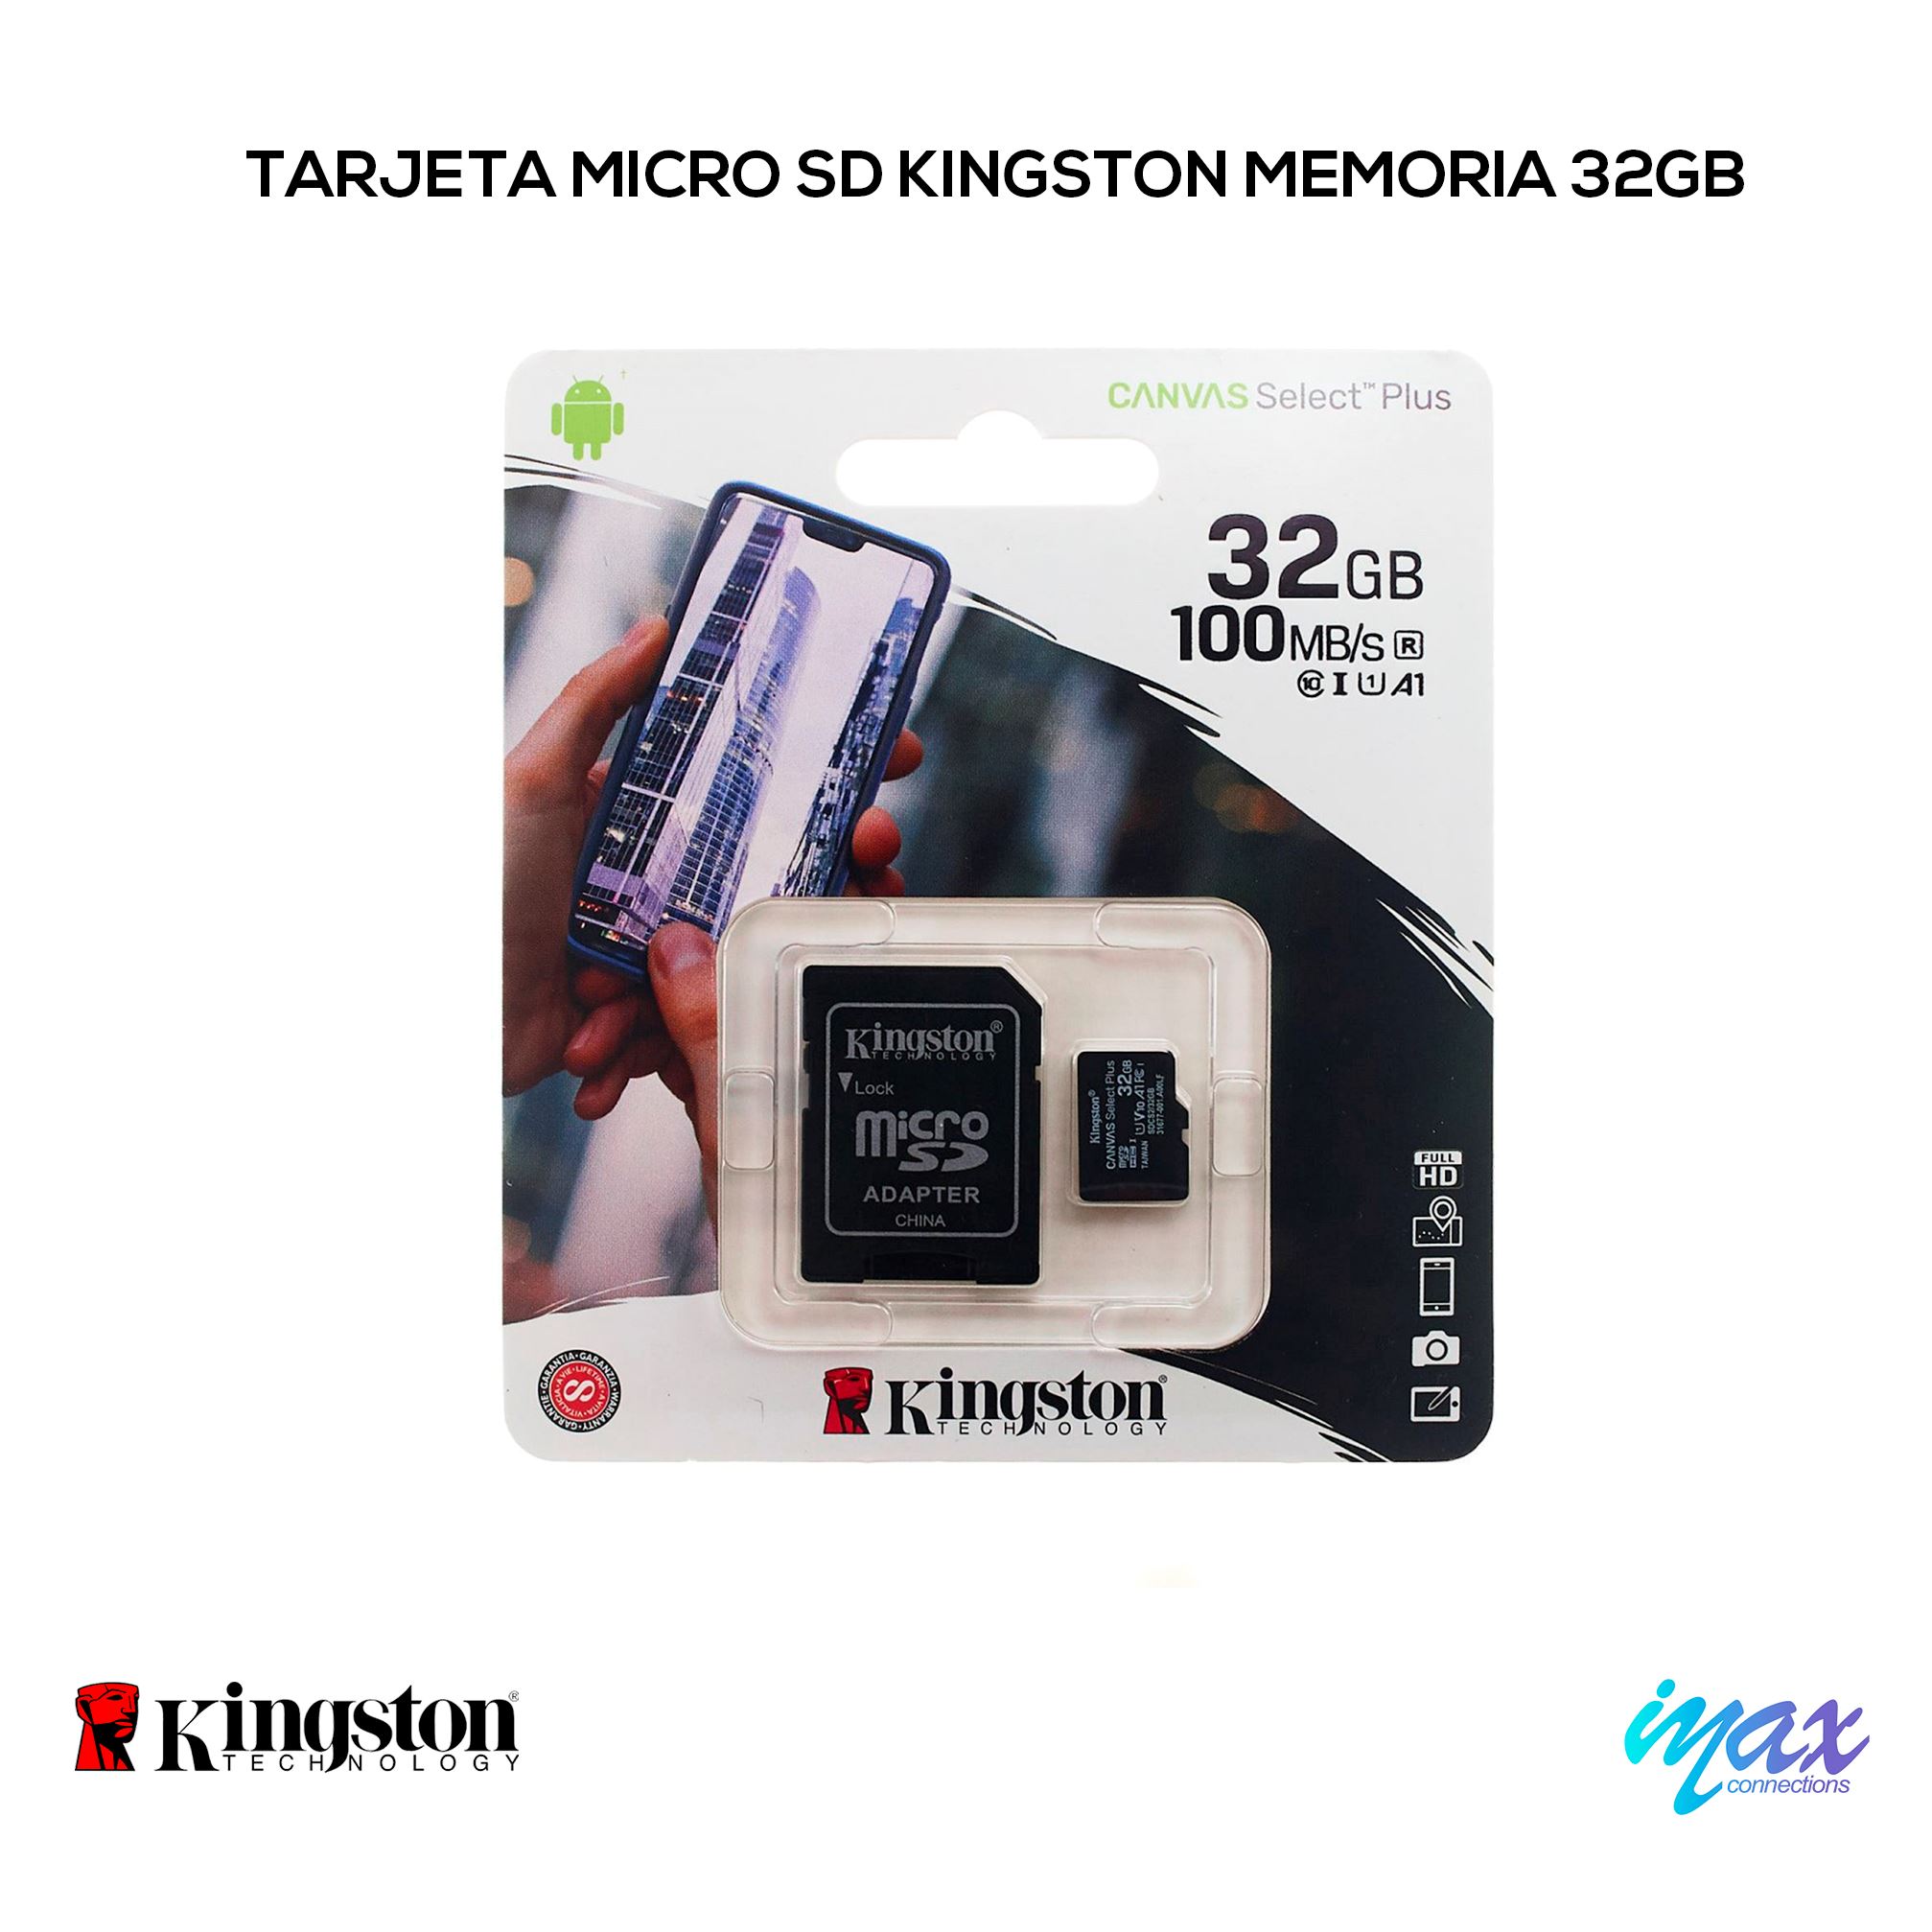 Tarjeta Micro SD Kingston memoria 32gb clase 10 original